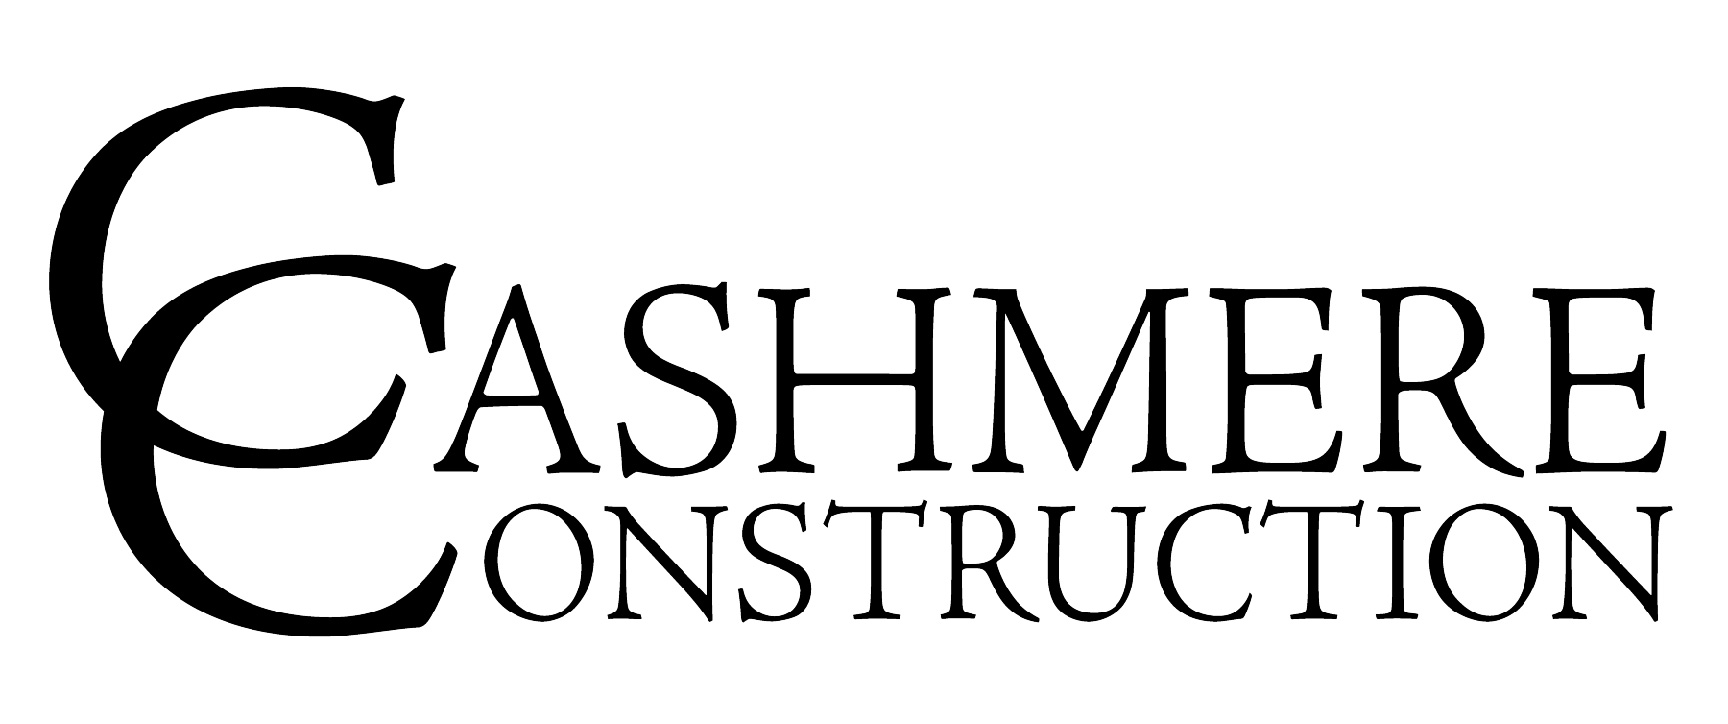 Cashmere Construction Logo